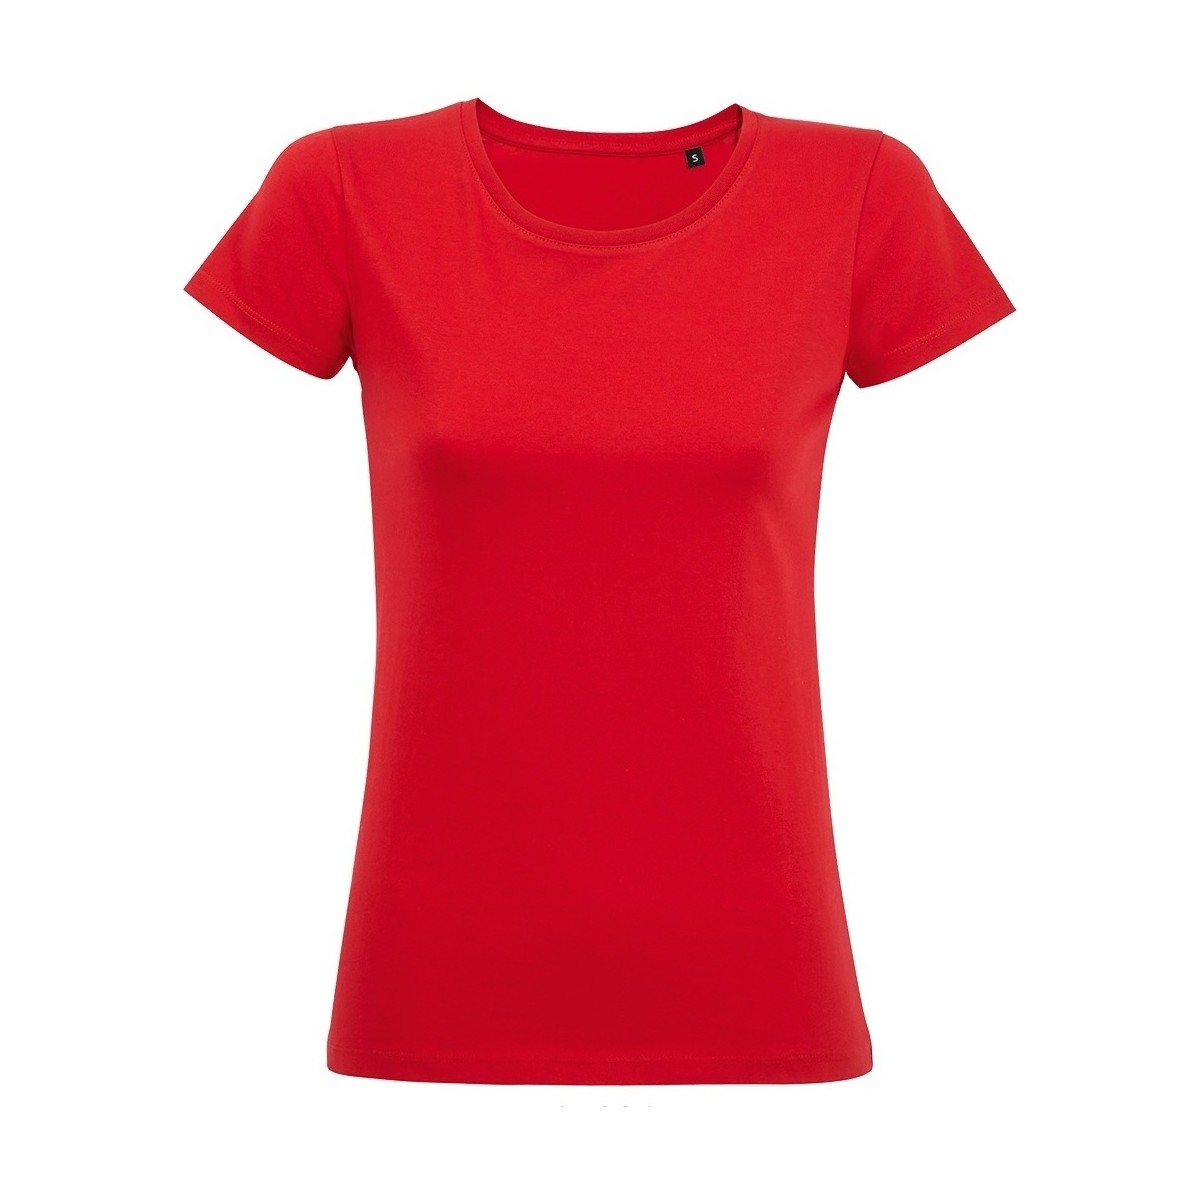 textil Mujer Camisetas manga larga Sols Milo Rojo